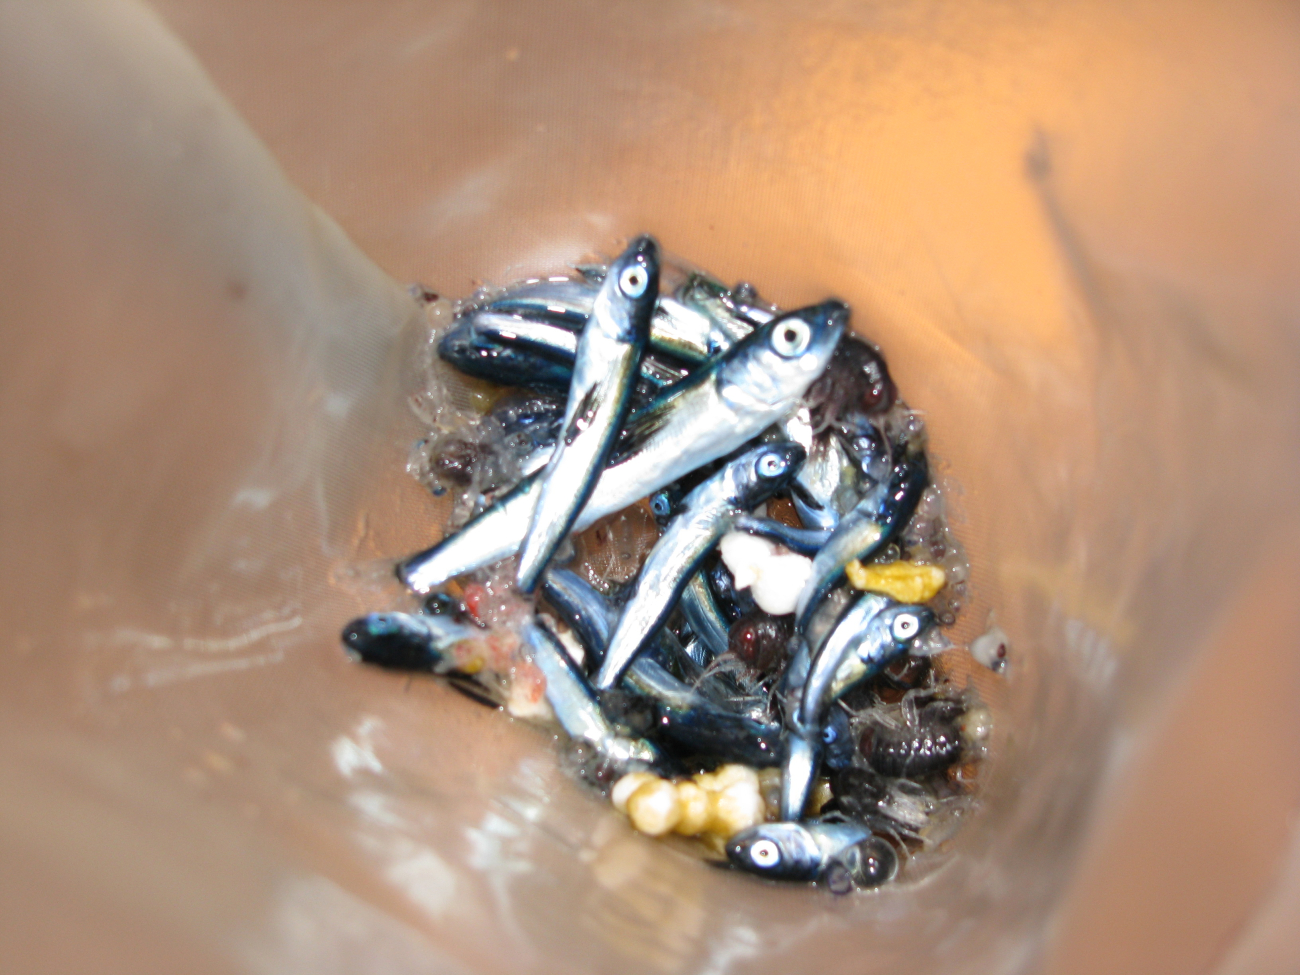 Juvenile fish captured in plankton tow